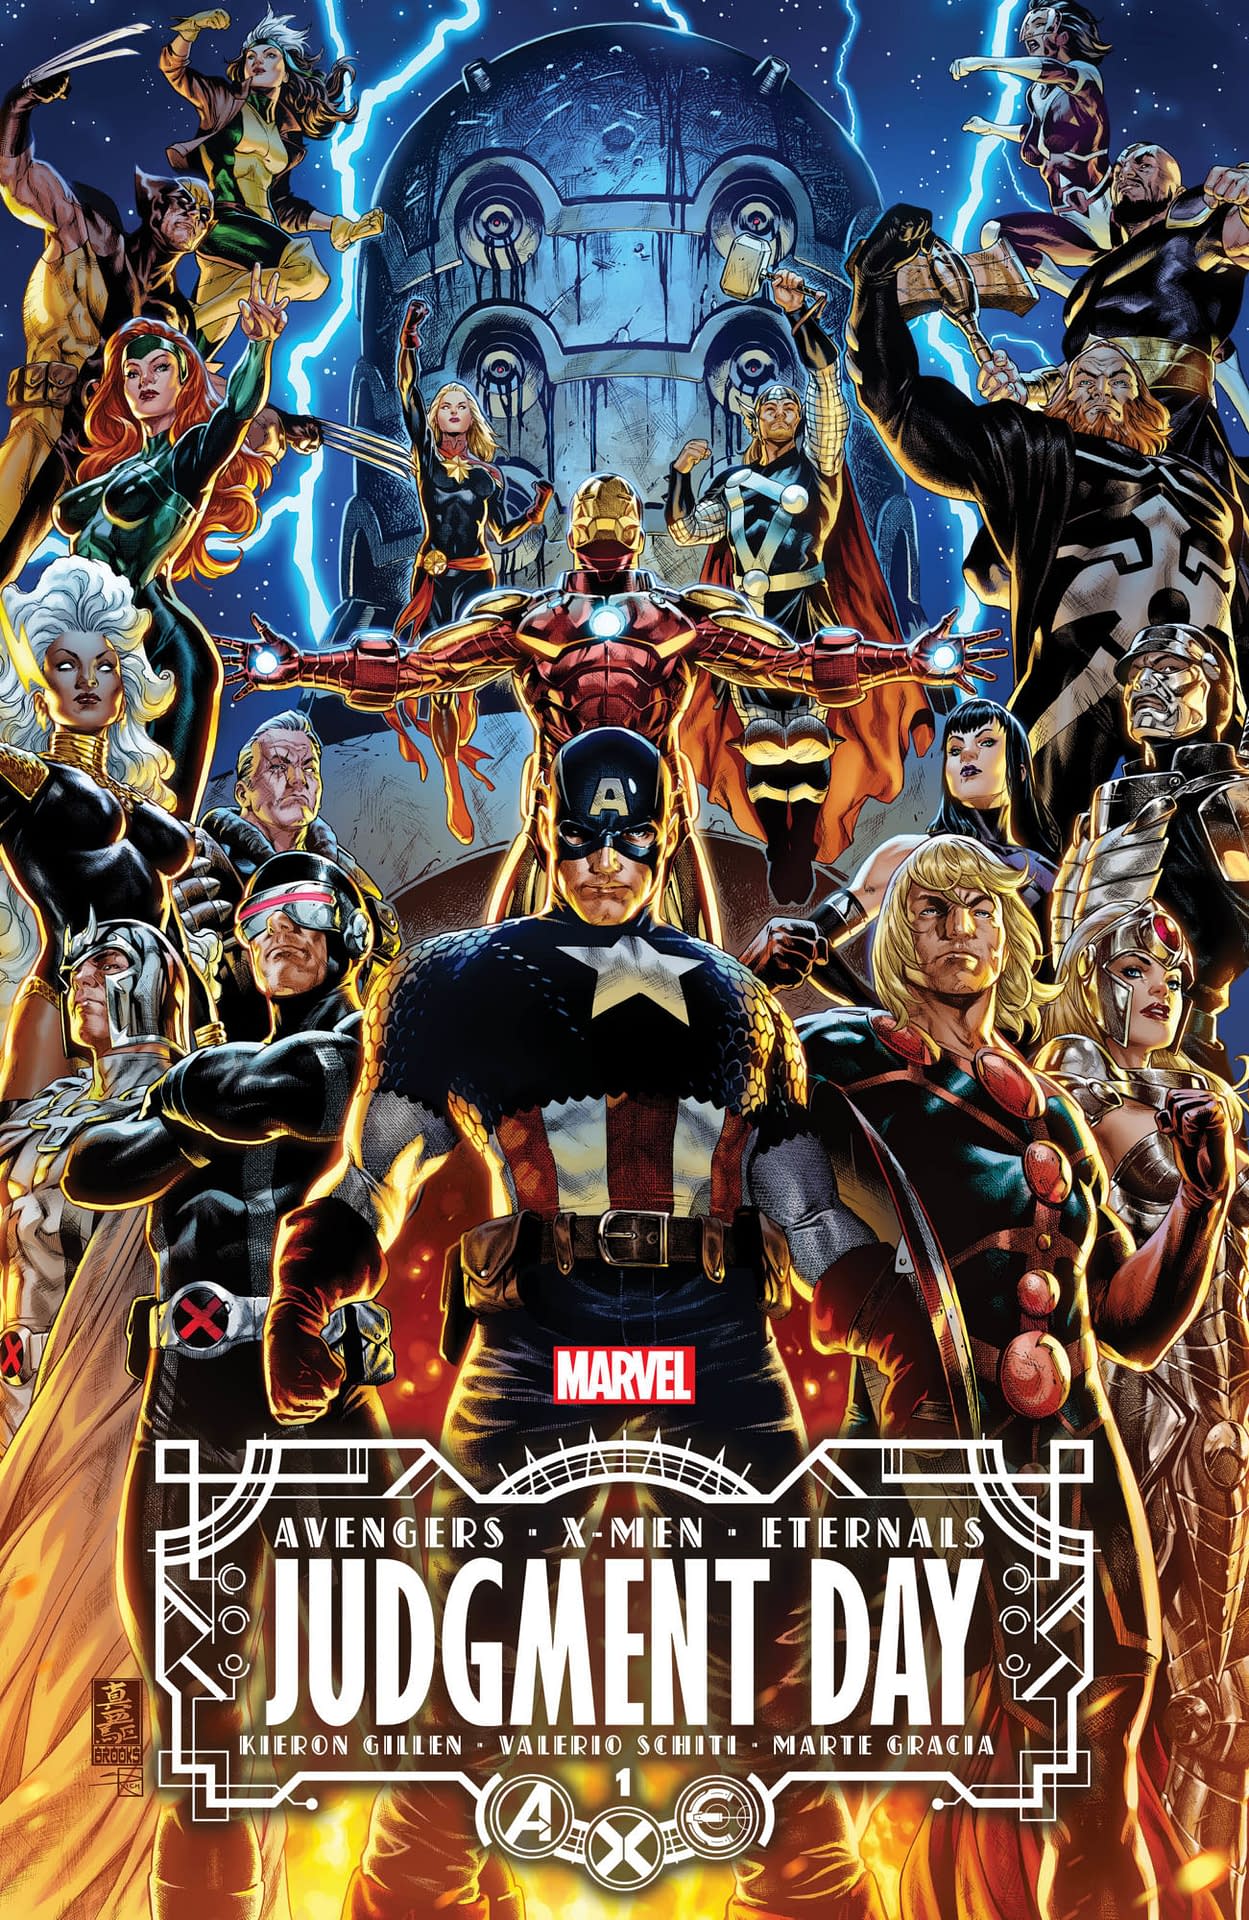 We'll Avenge It - Marvel Limited Edition